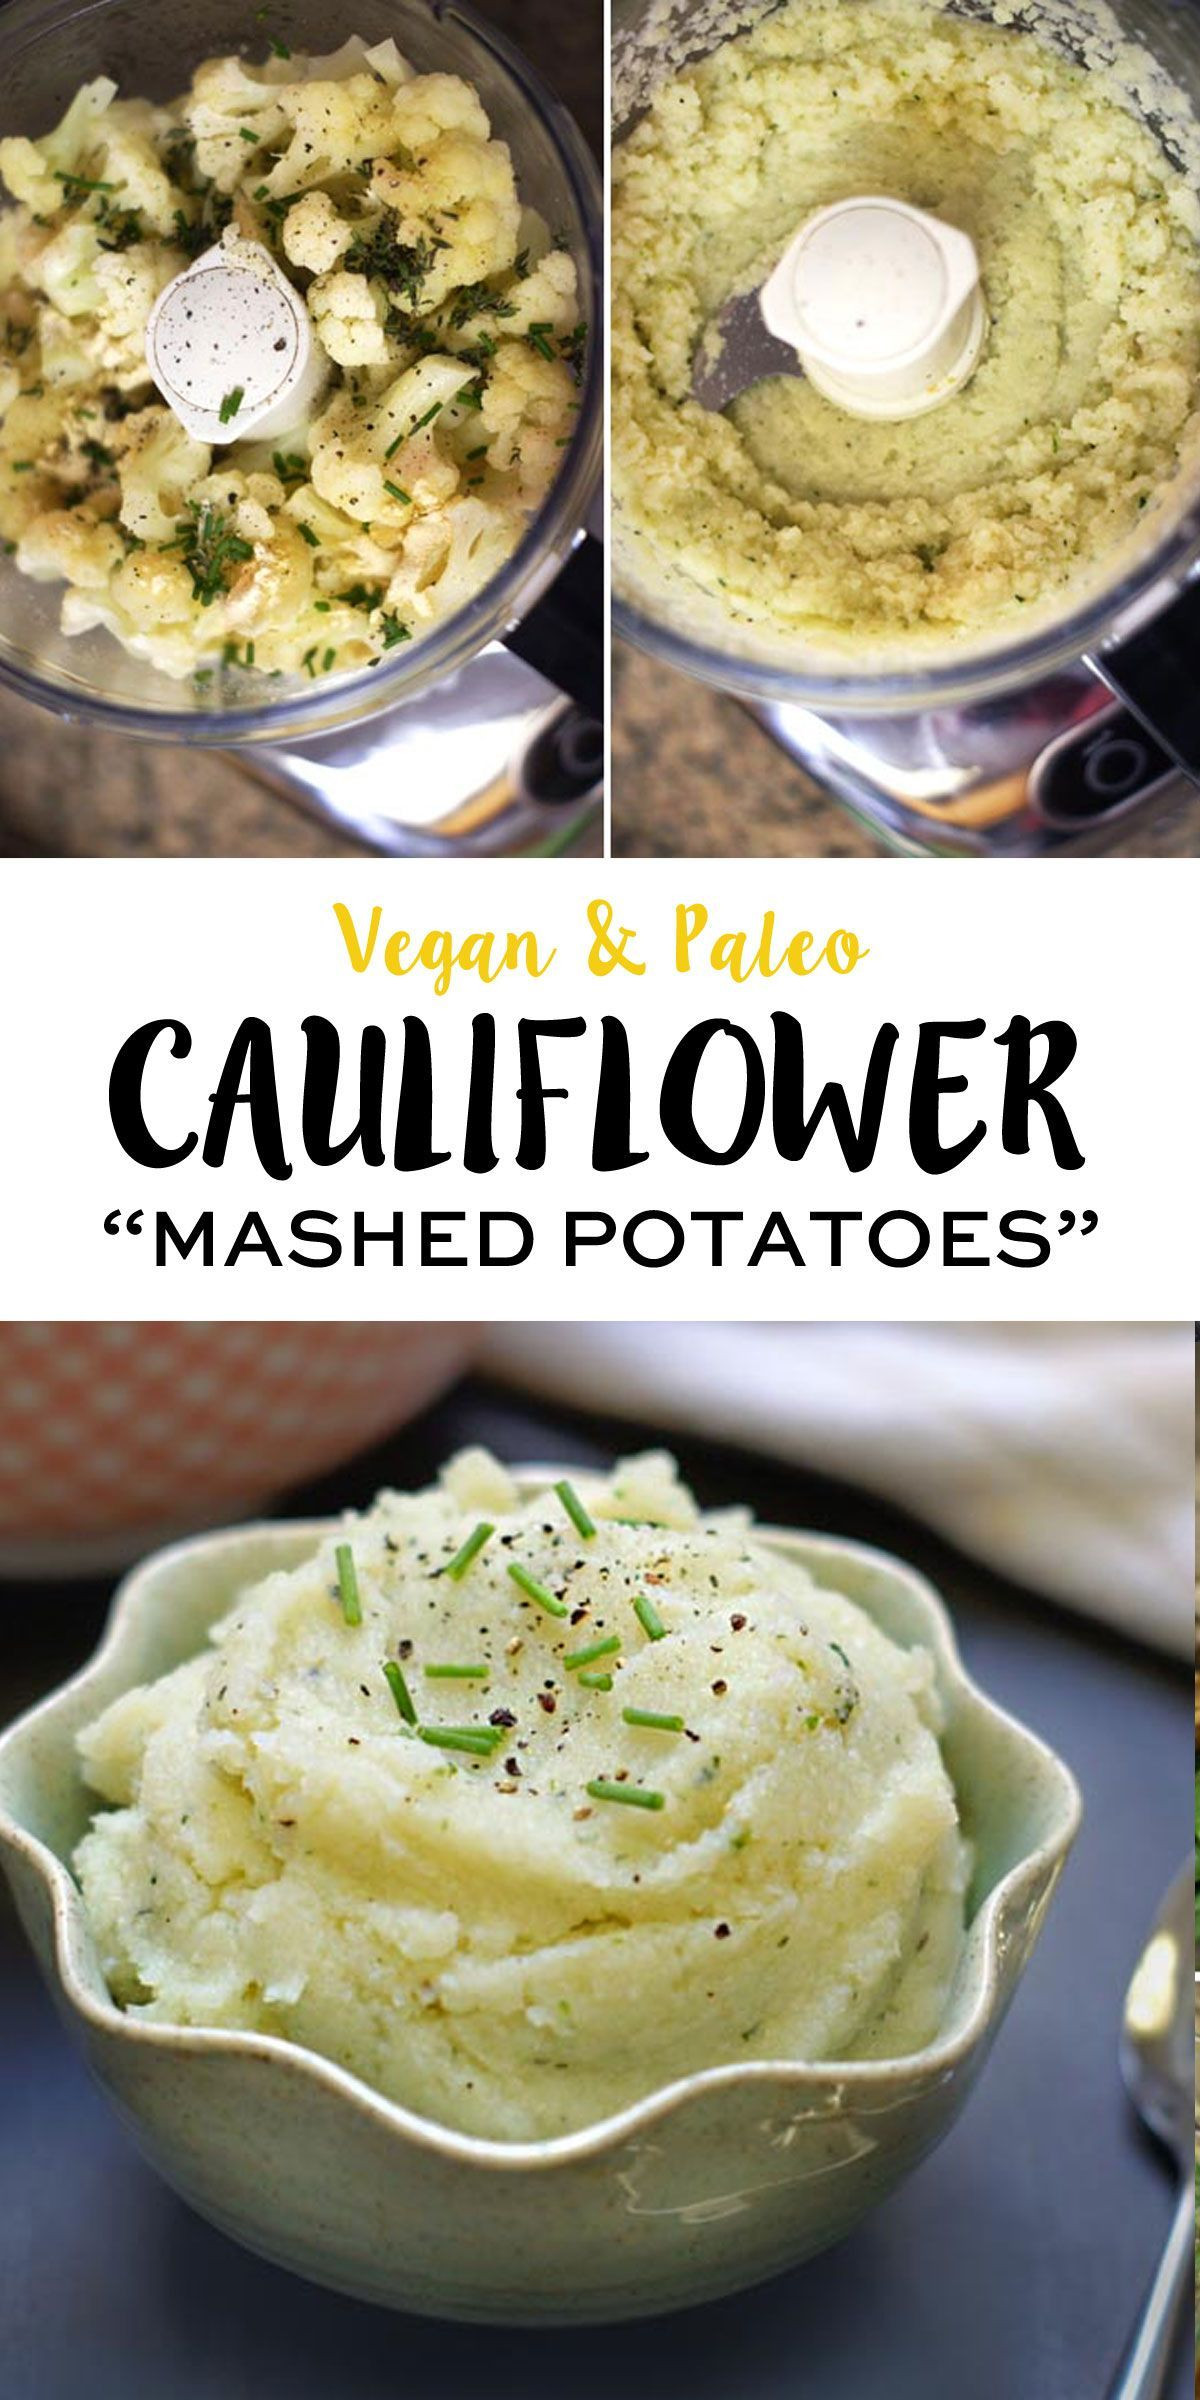 Can Diabetics Eat Mashed Potatoes
 This mashed cauliflower recipe tastes so much like mashed